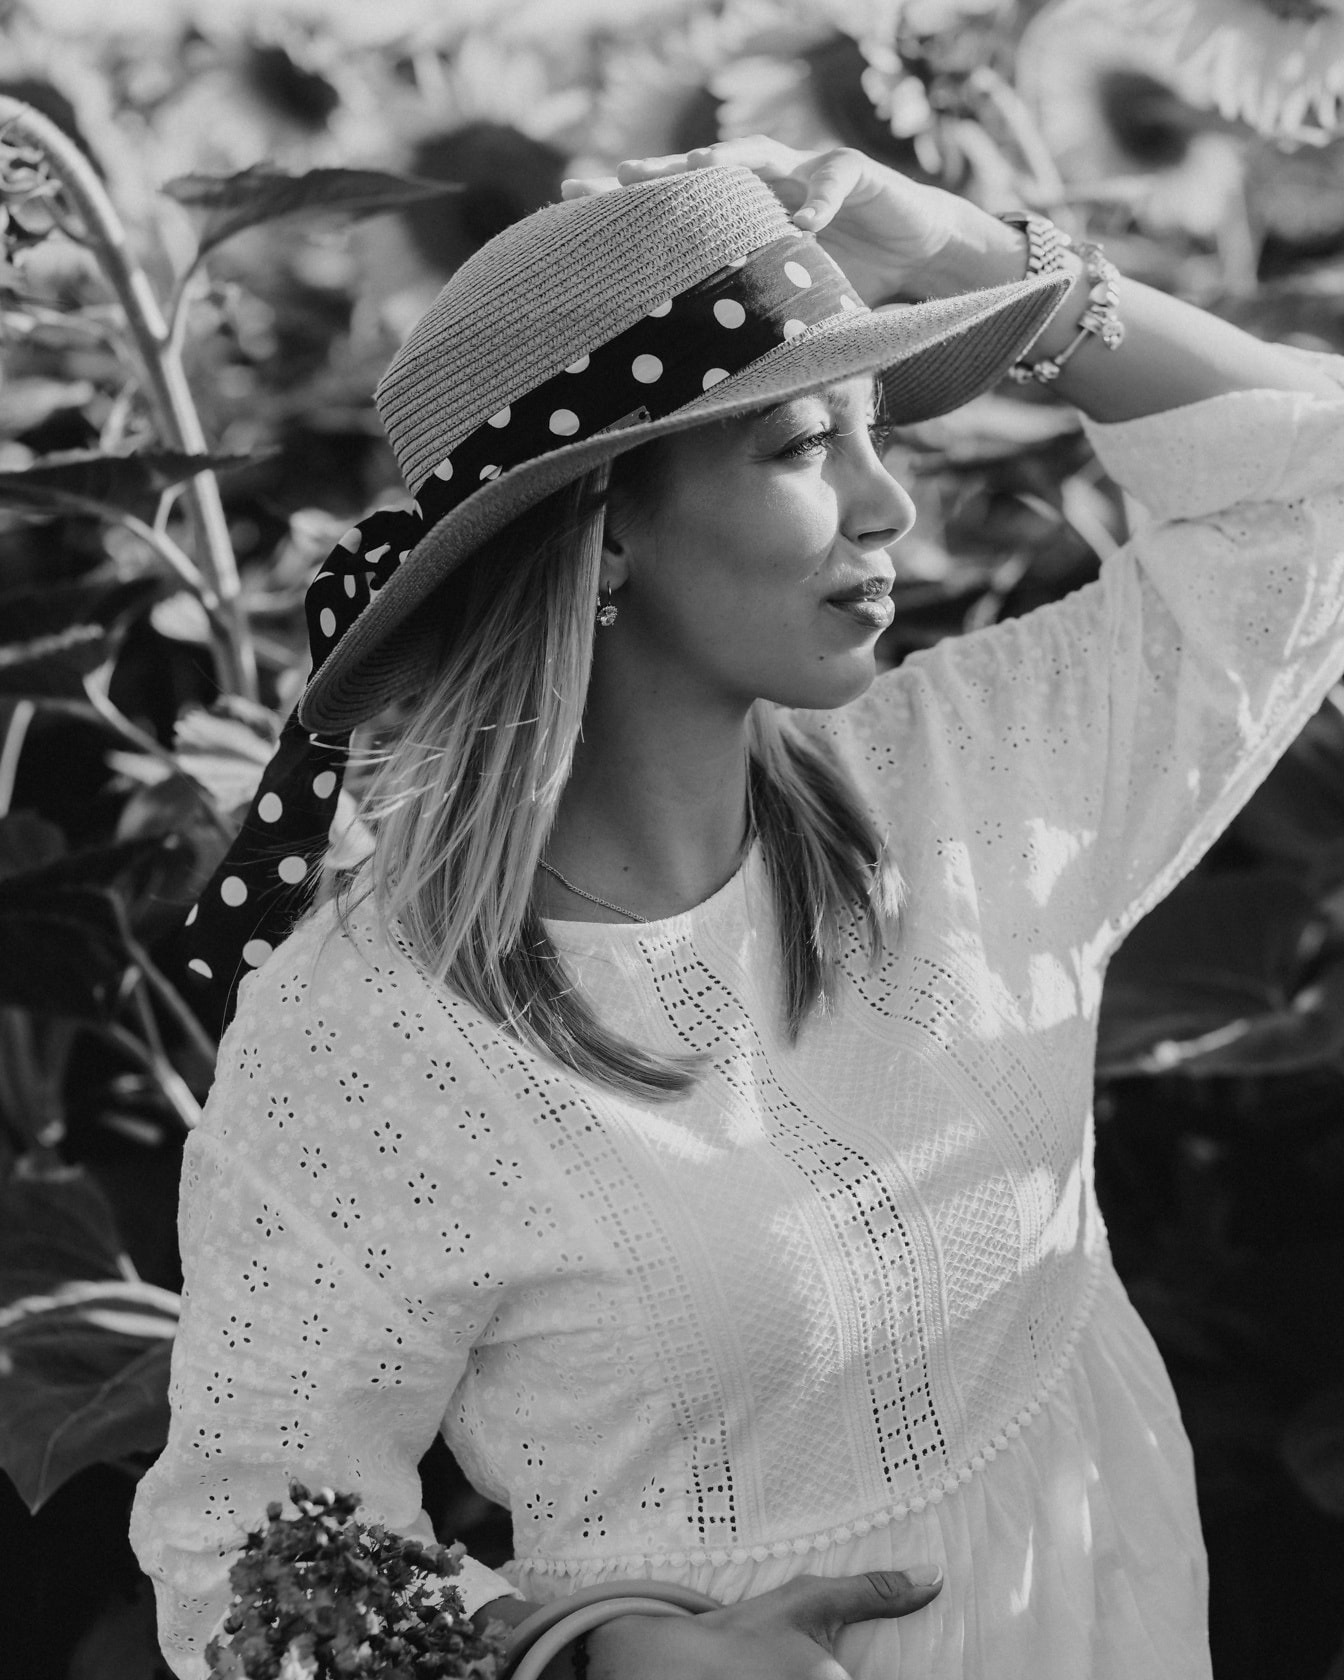 Портрет блондинки в солом’яному капелюсі в соняшниках поле монохромне фото